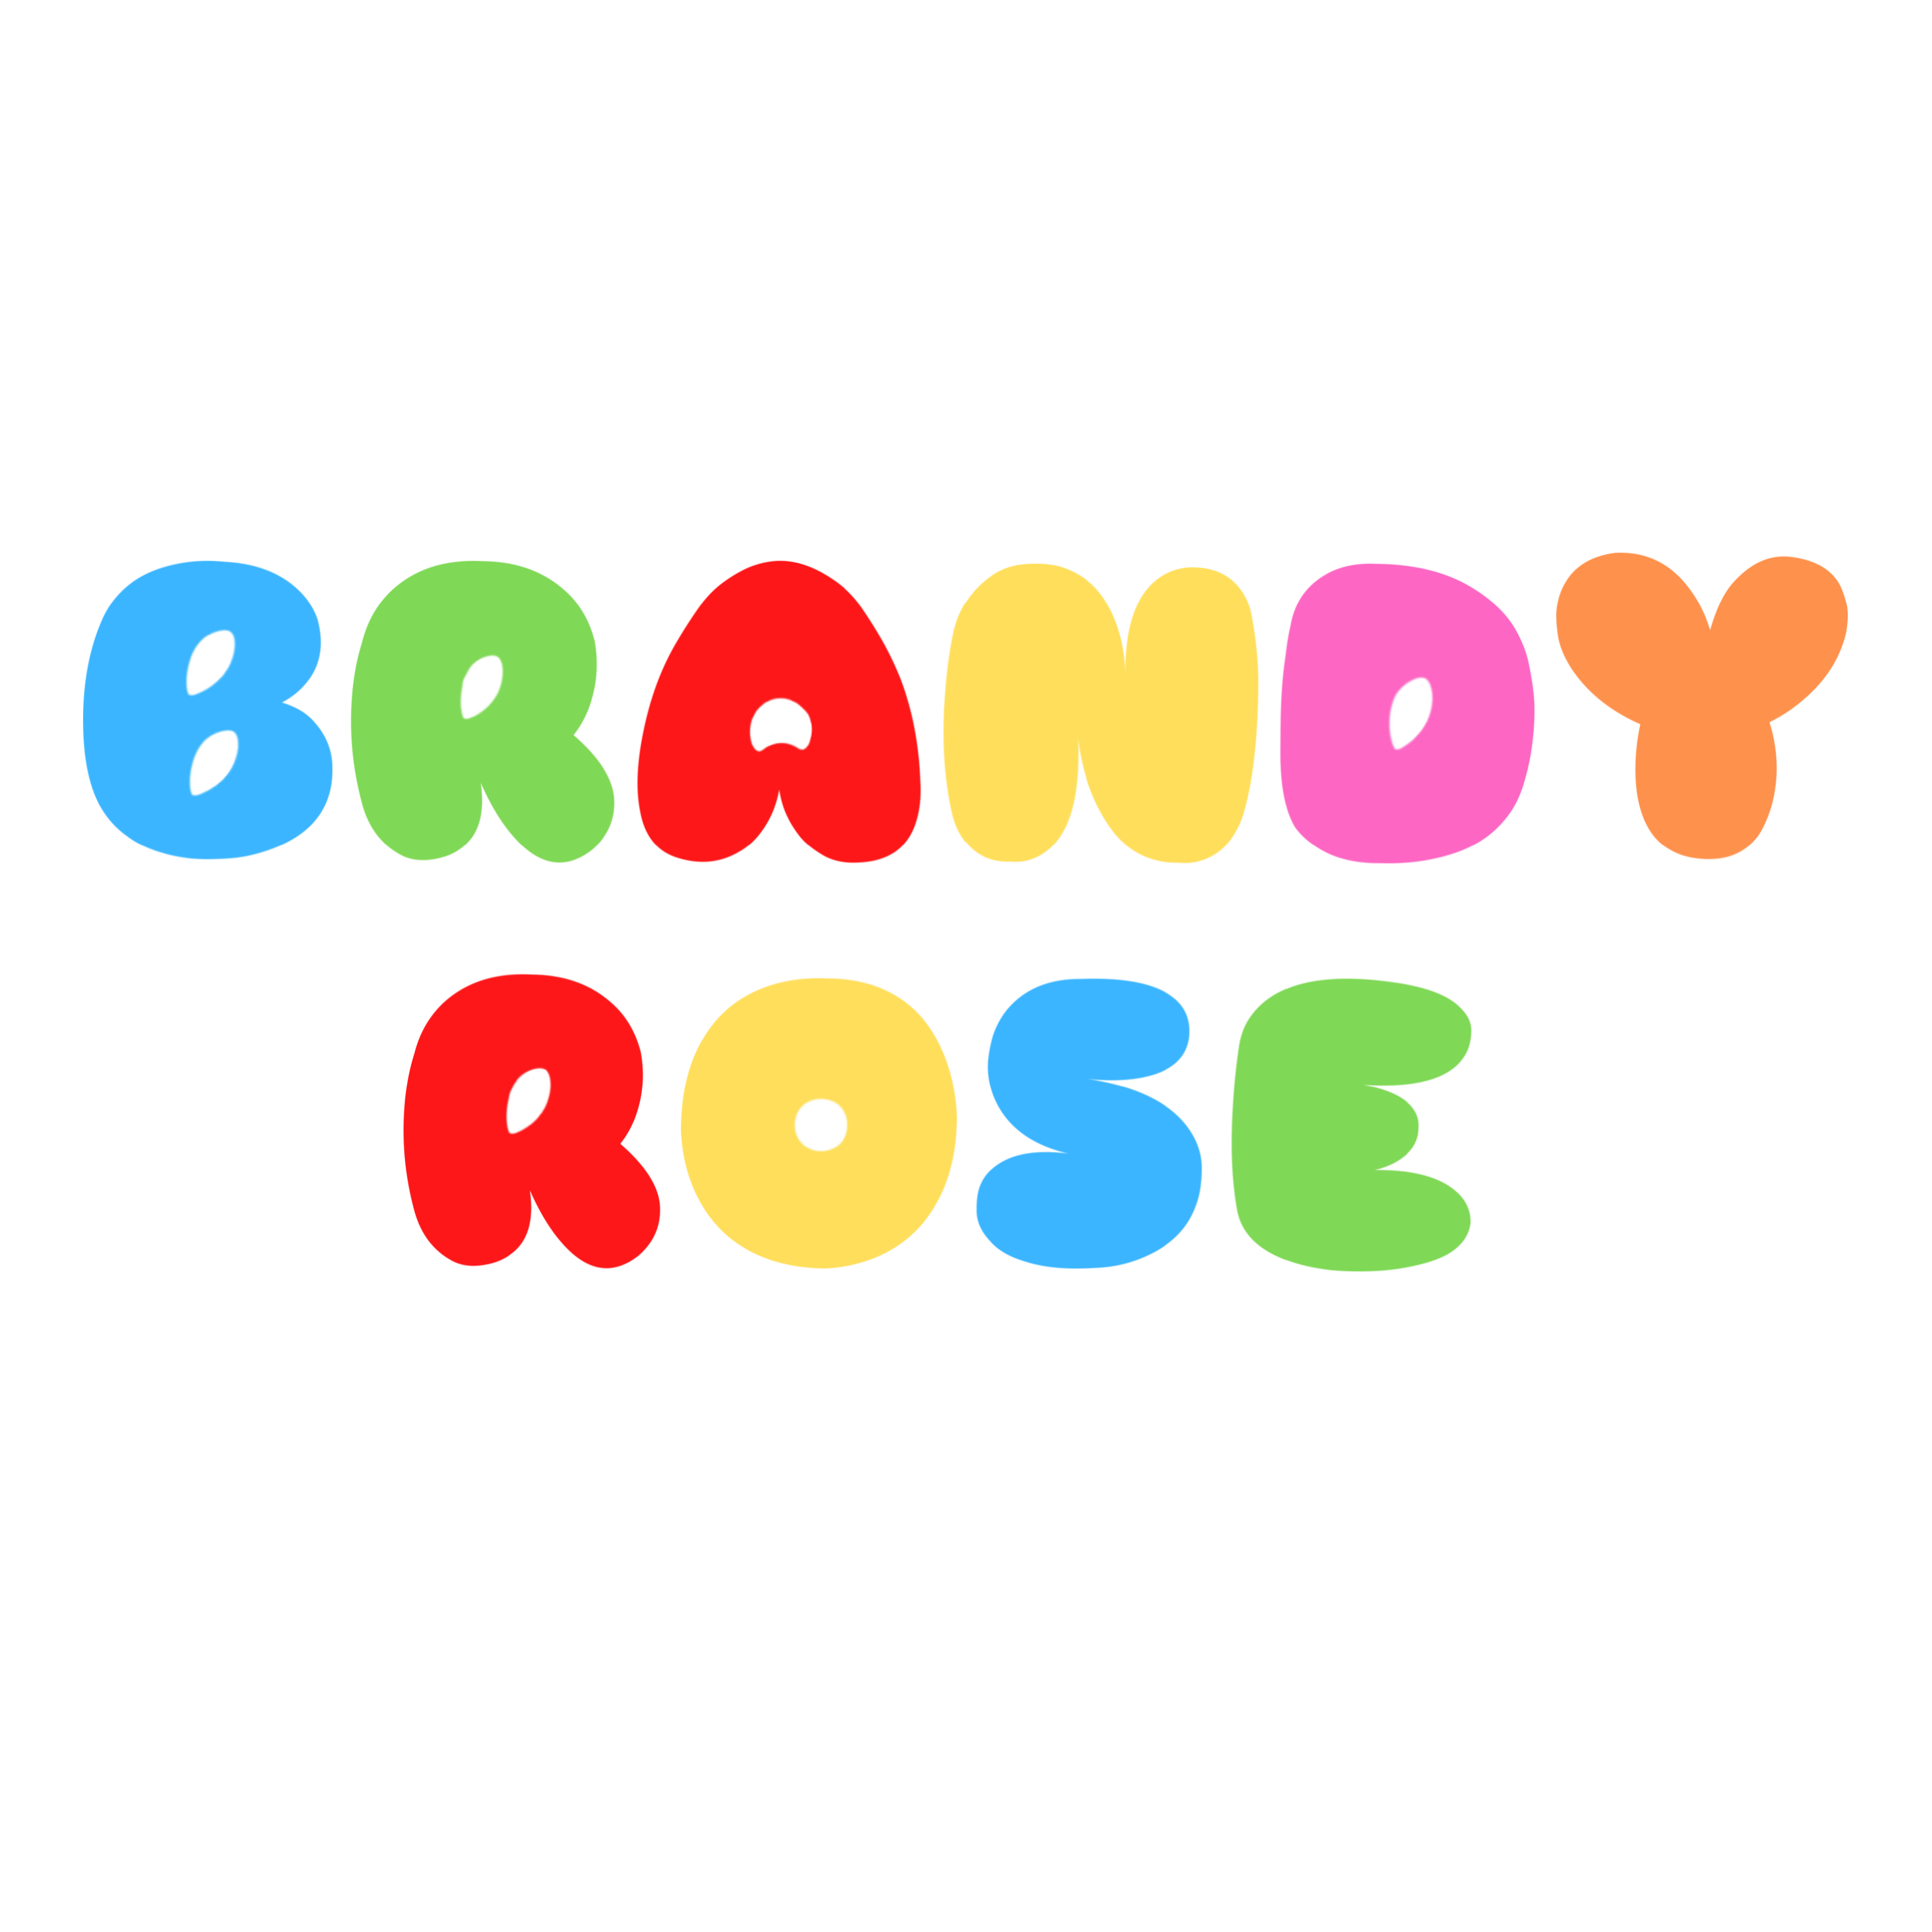 Brandy Rose